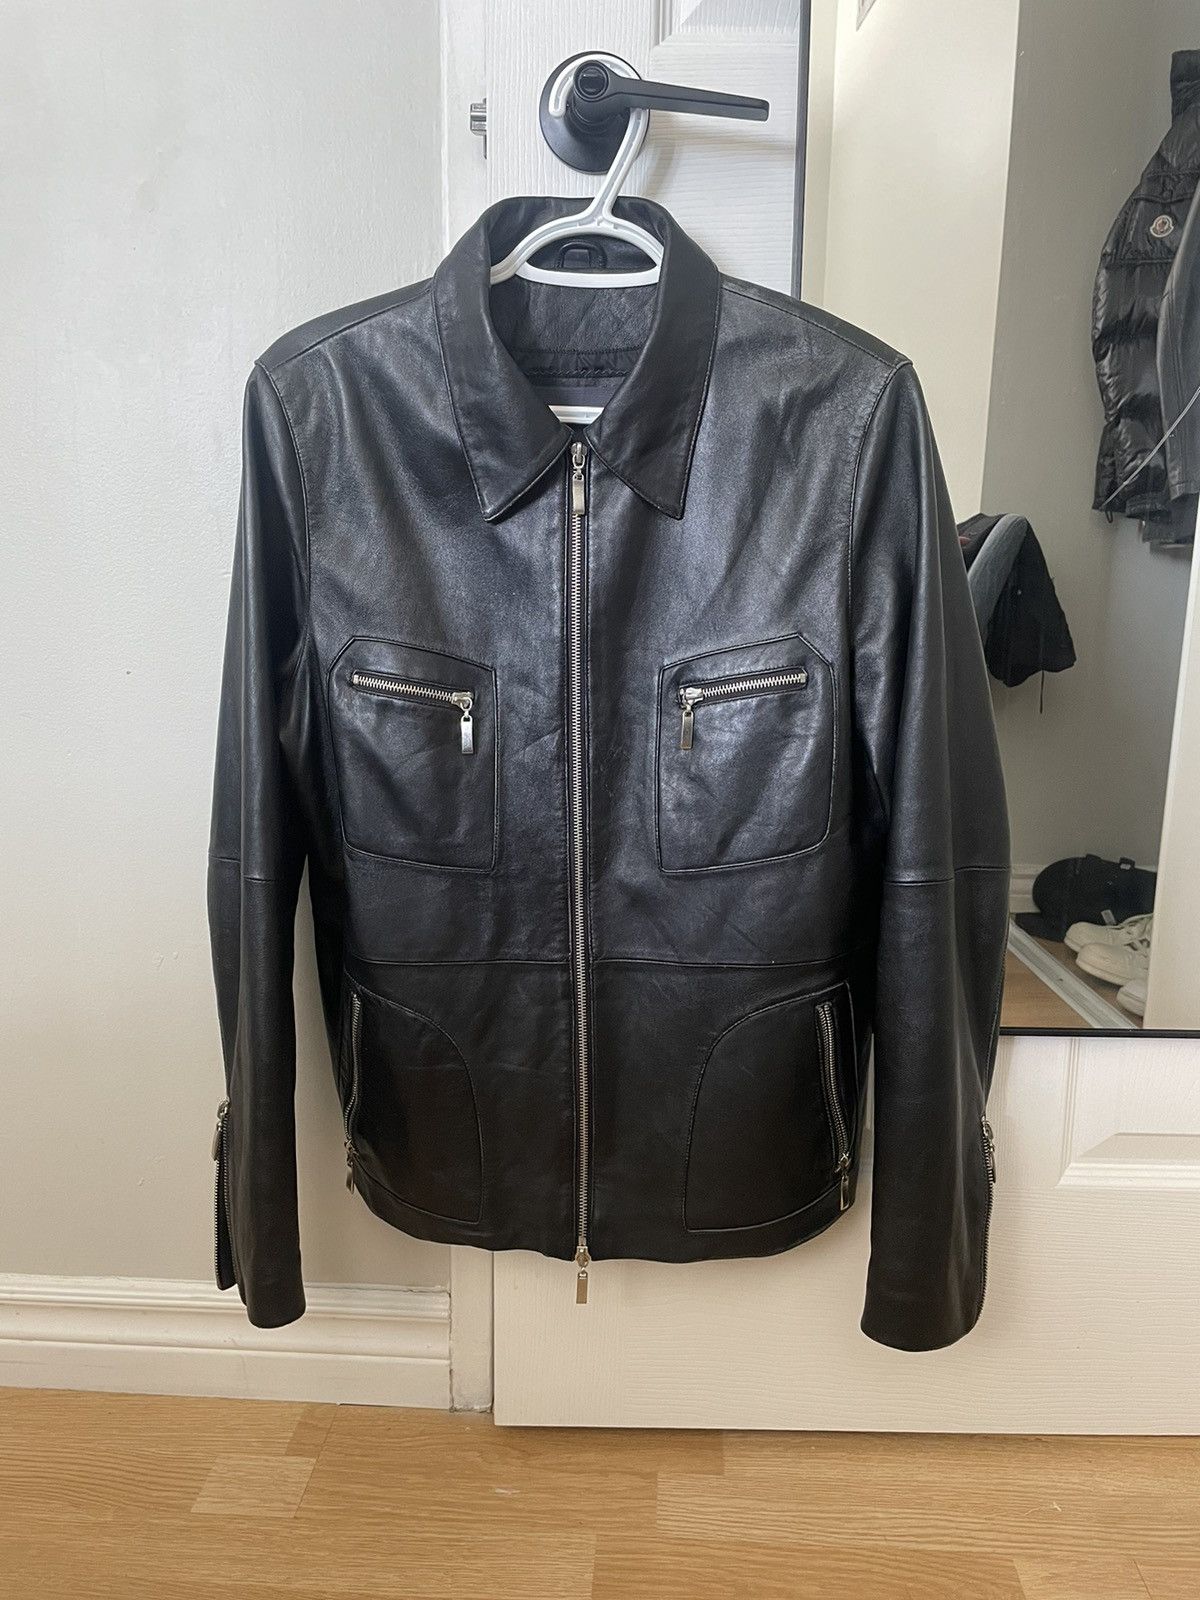 Tcm TCM Vintage leather jacket | Grailed